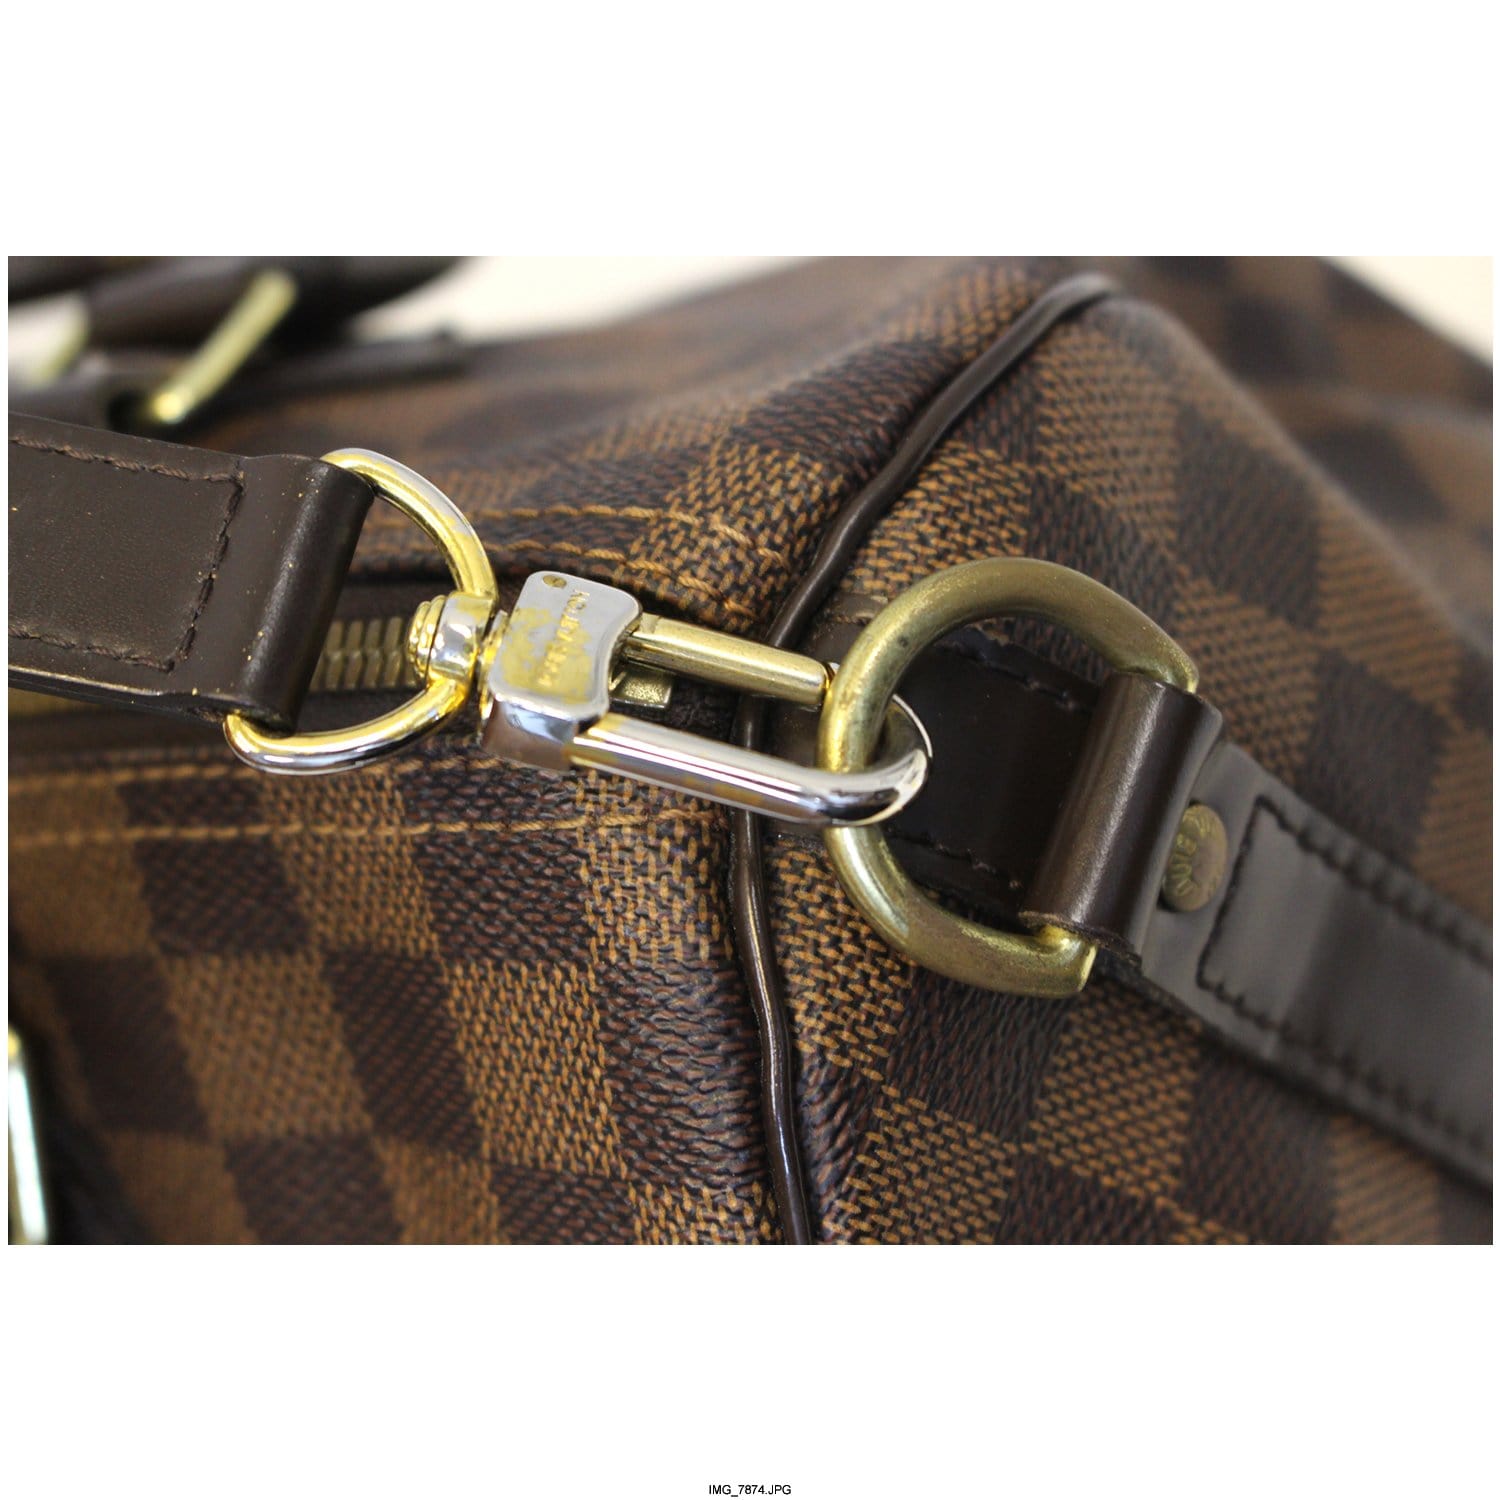 Louis Vuitton-Damier Ebene Speedy Bandouliere 30 with Strap